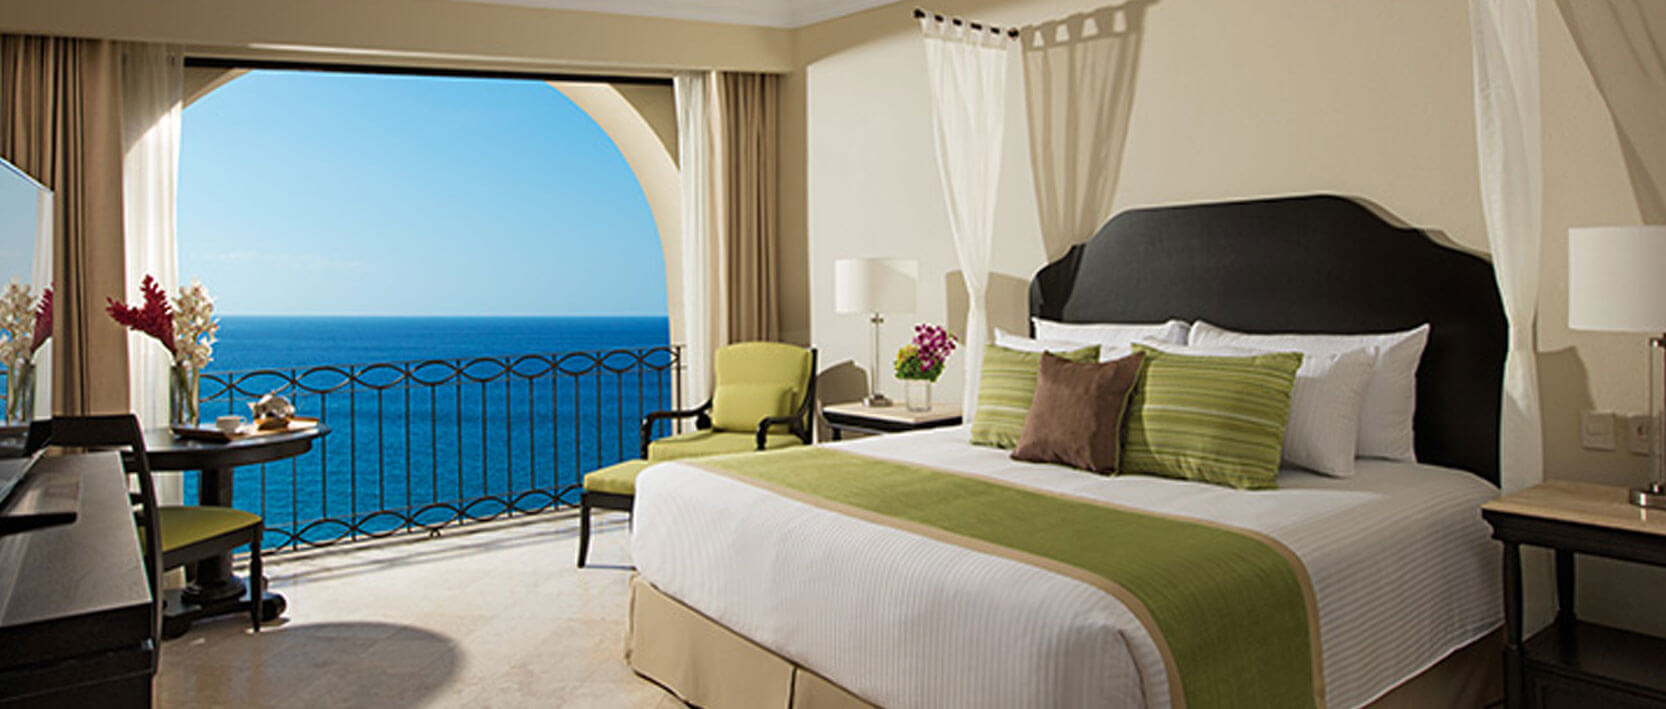 Dreams Los Cabos Suites Accommodations - One Bedroom Suite Ocean View